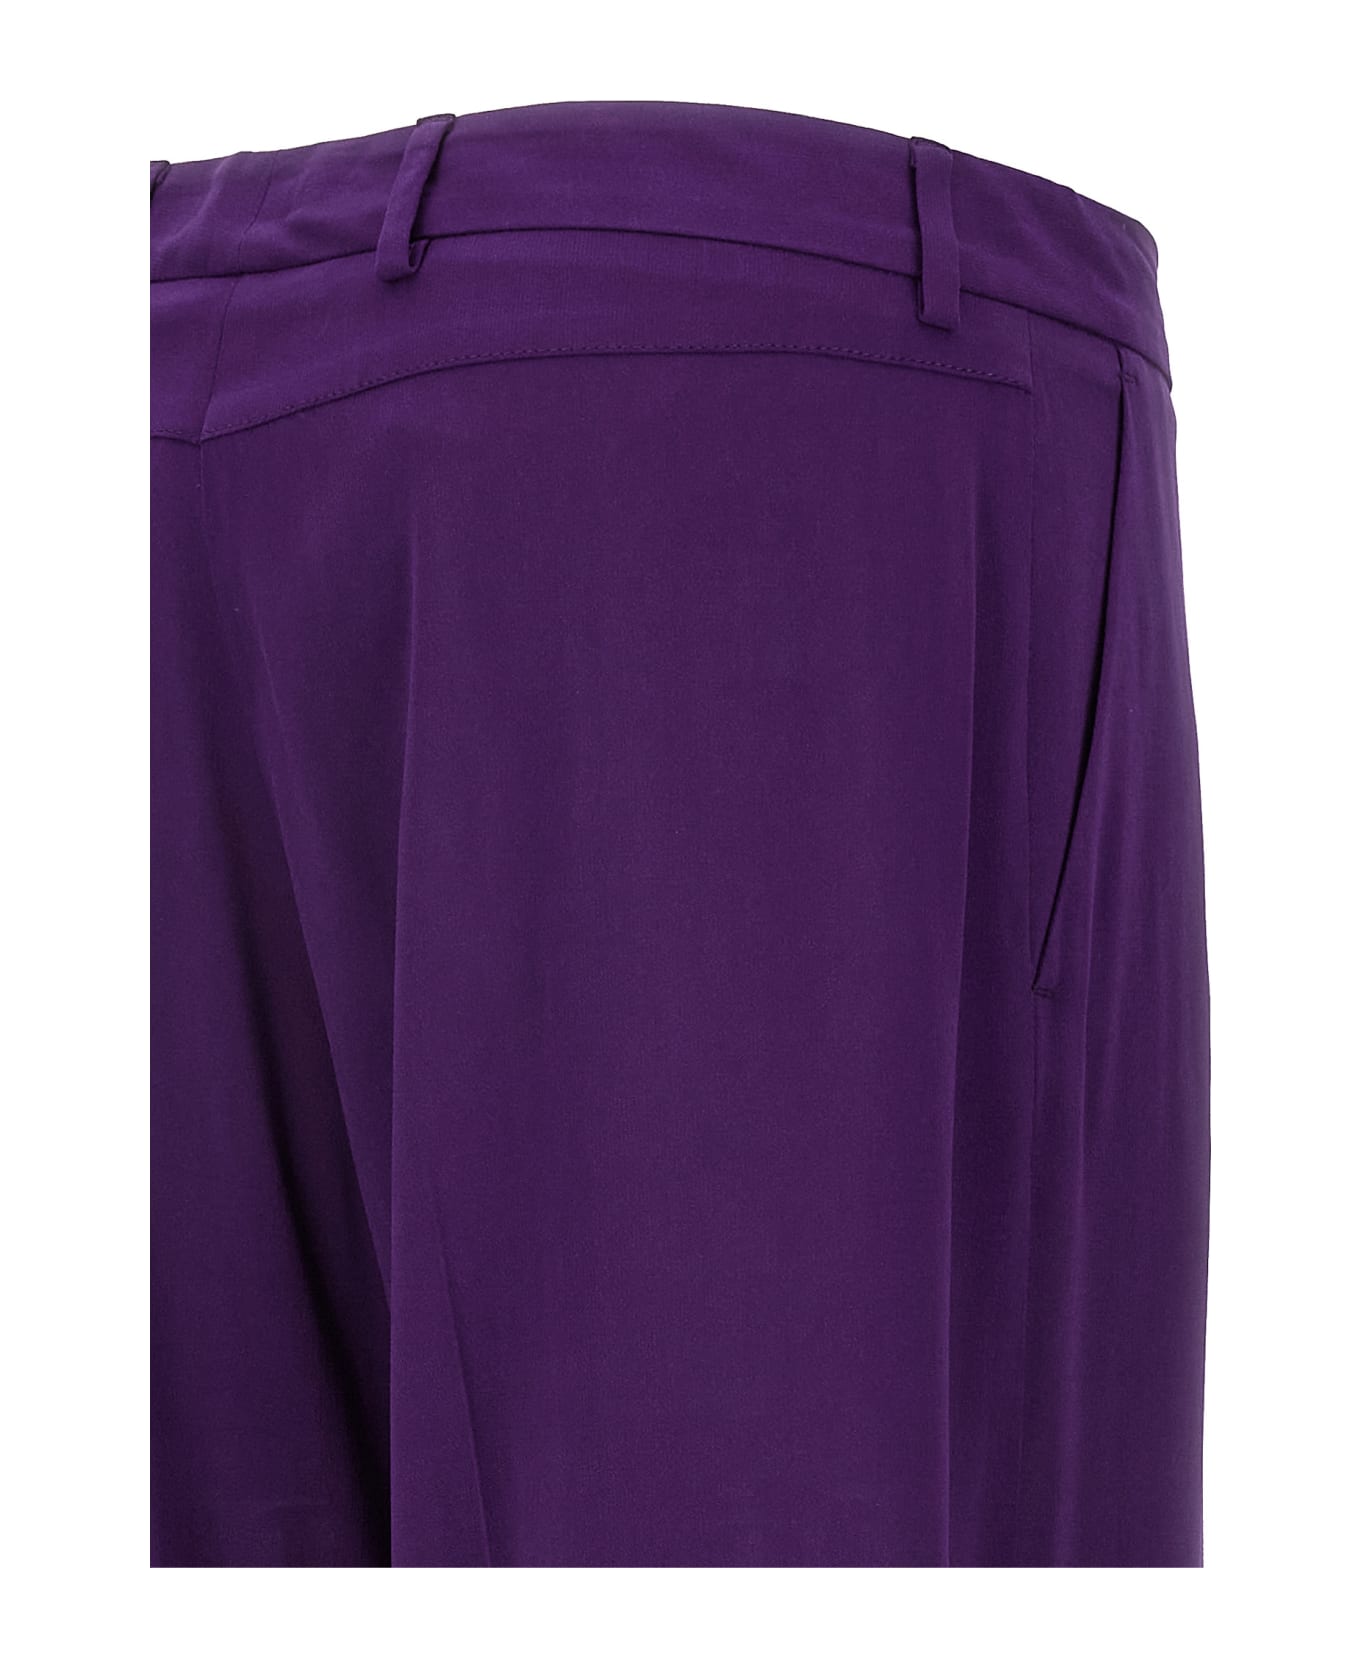 Alberto Biani 'hippy' Trousers - Purple